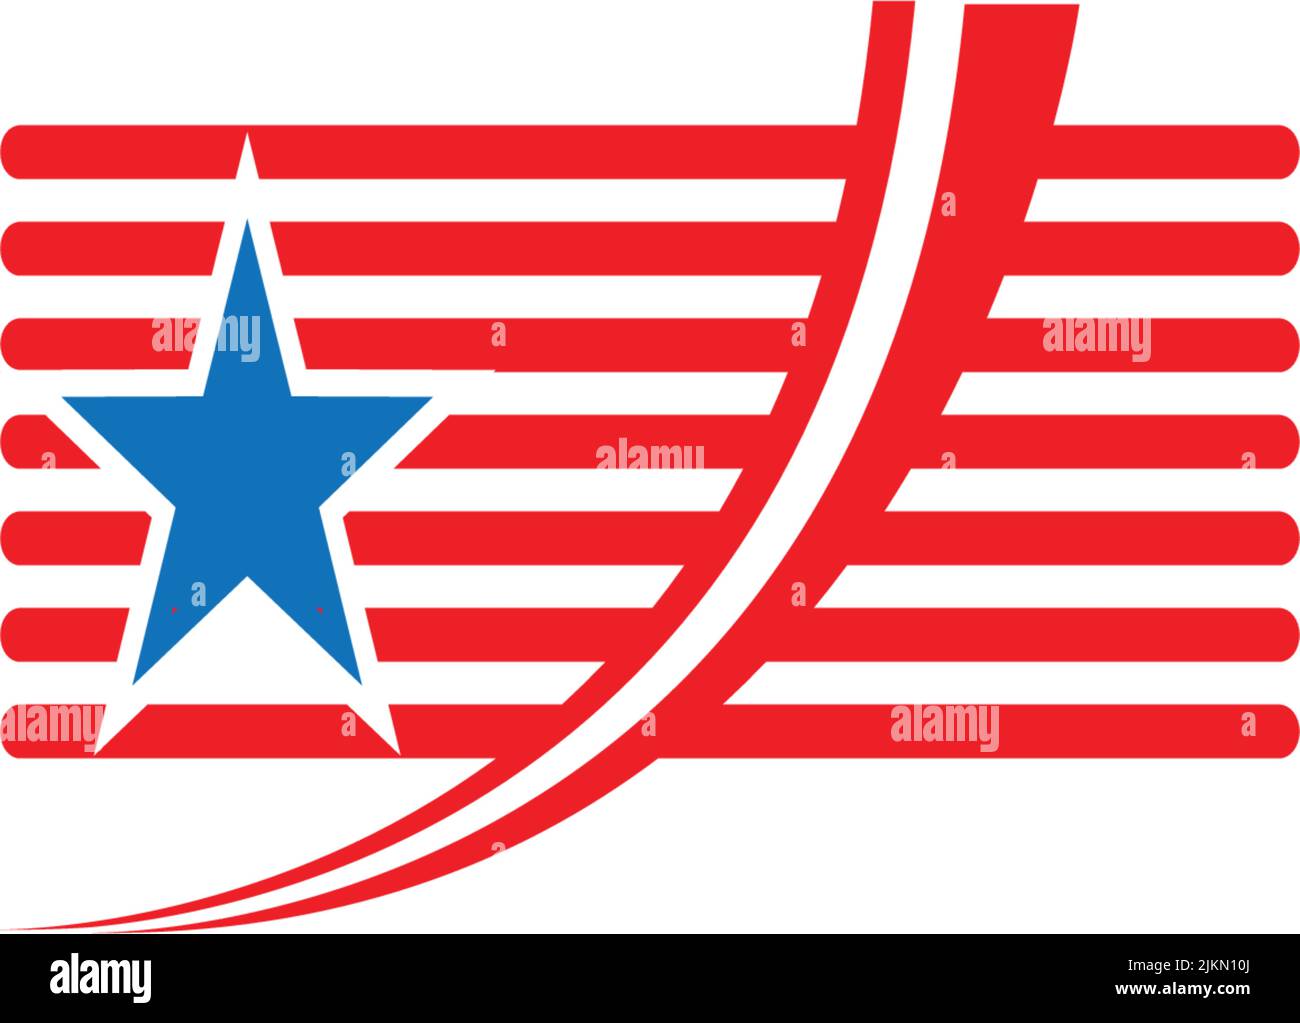 Cincinnati Reds Reds Heads Logo Vector - (.SVG + .PNG) 